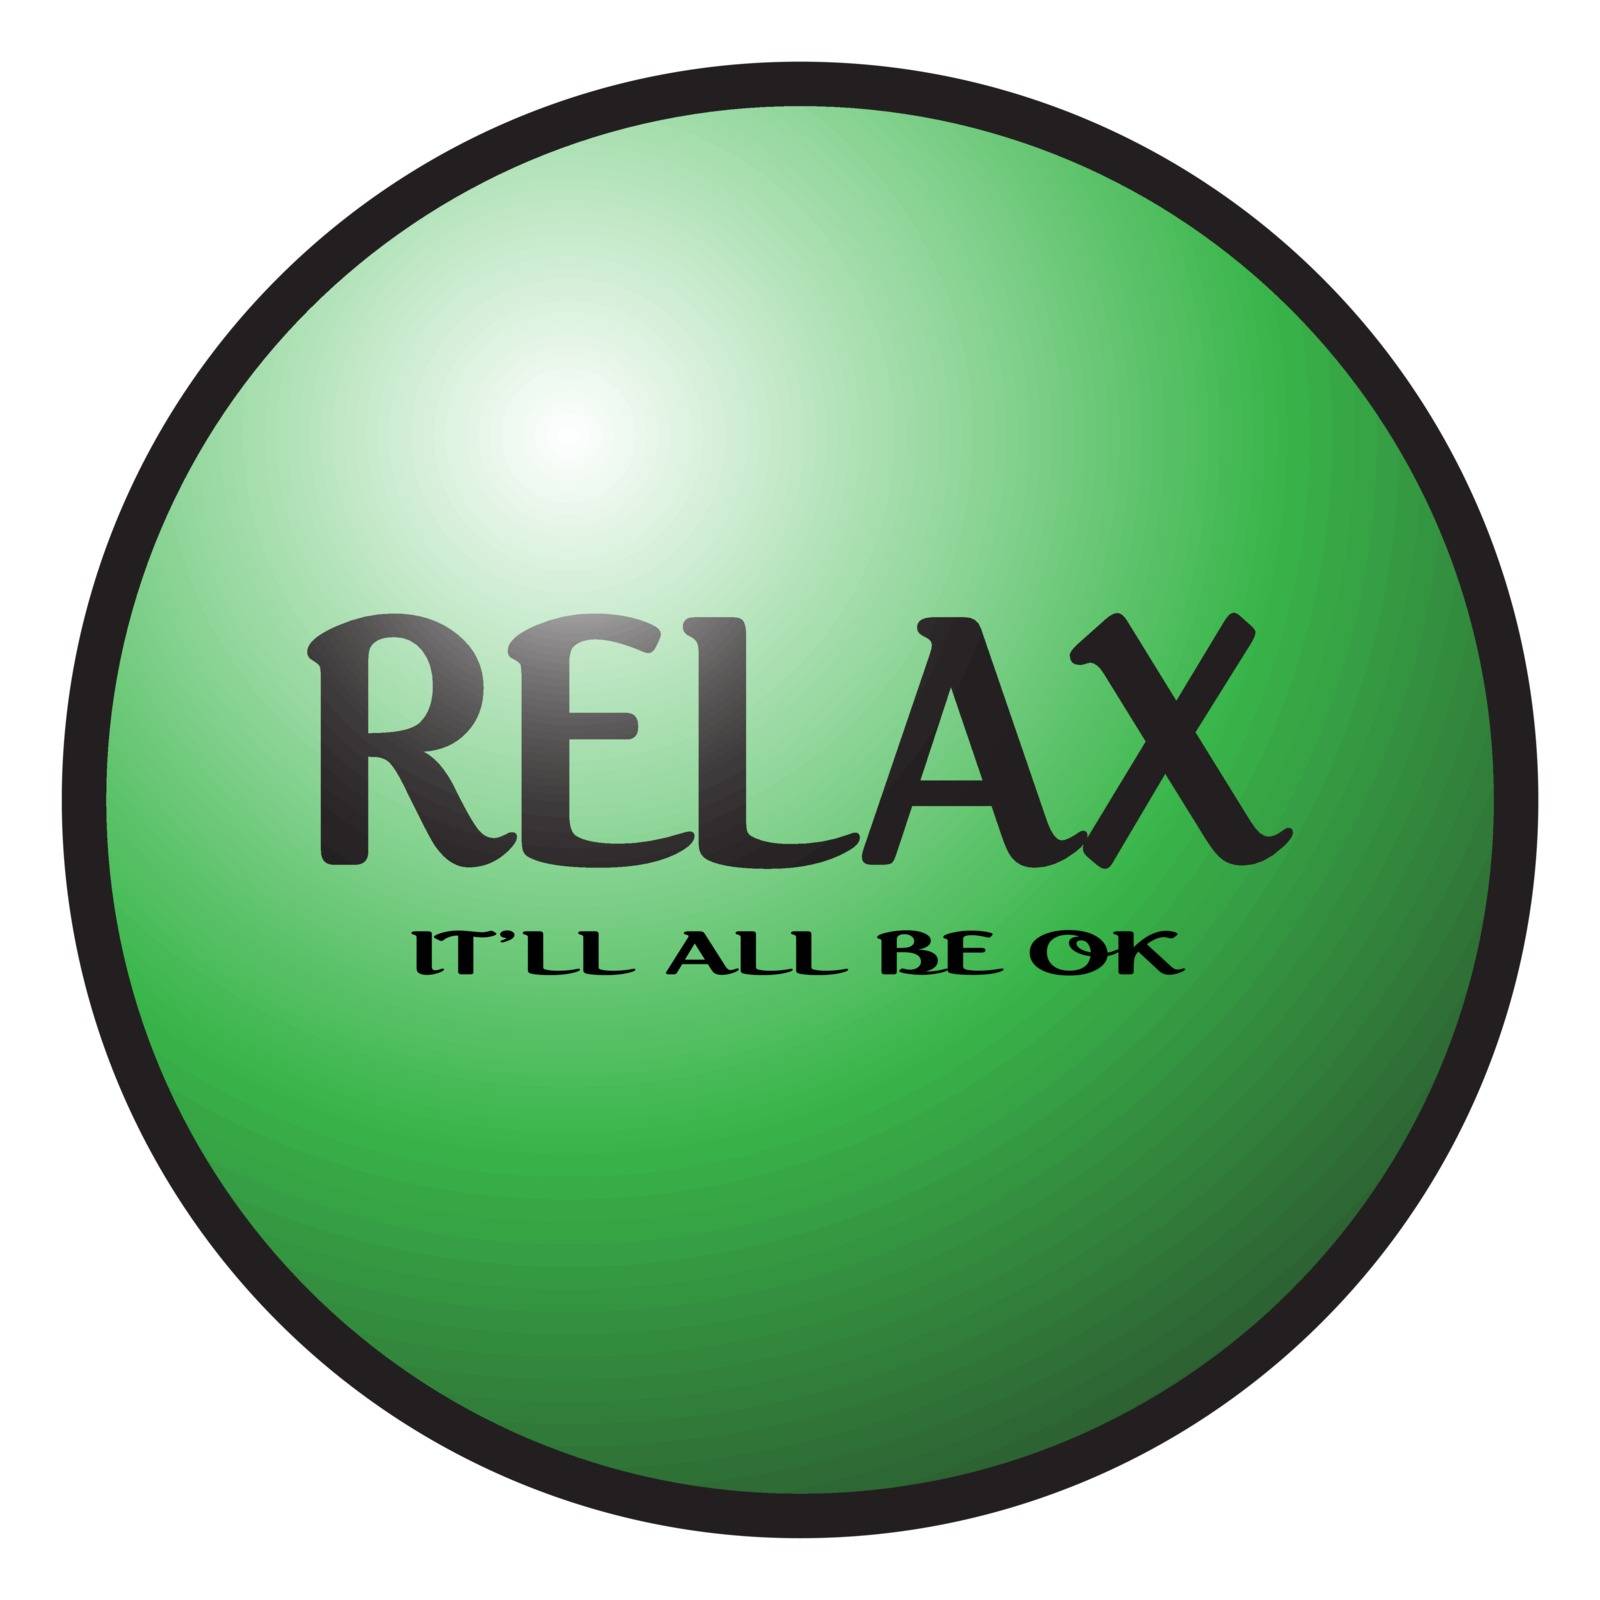 Relax Button by DavidScar